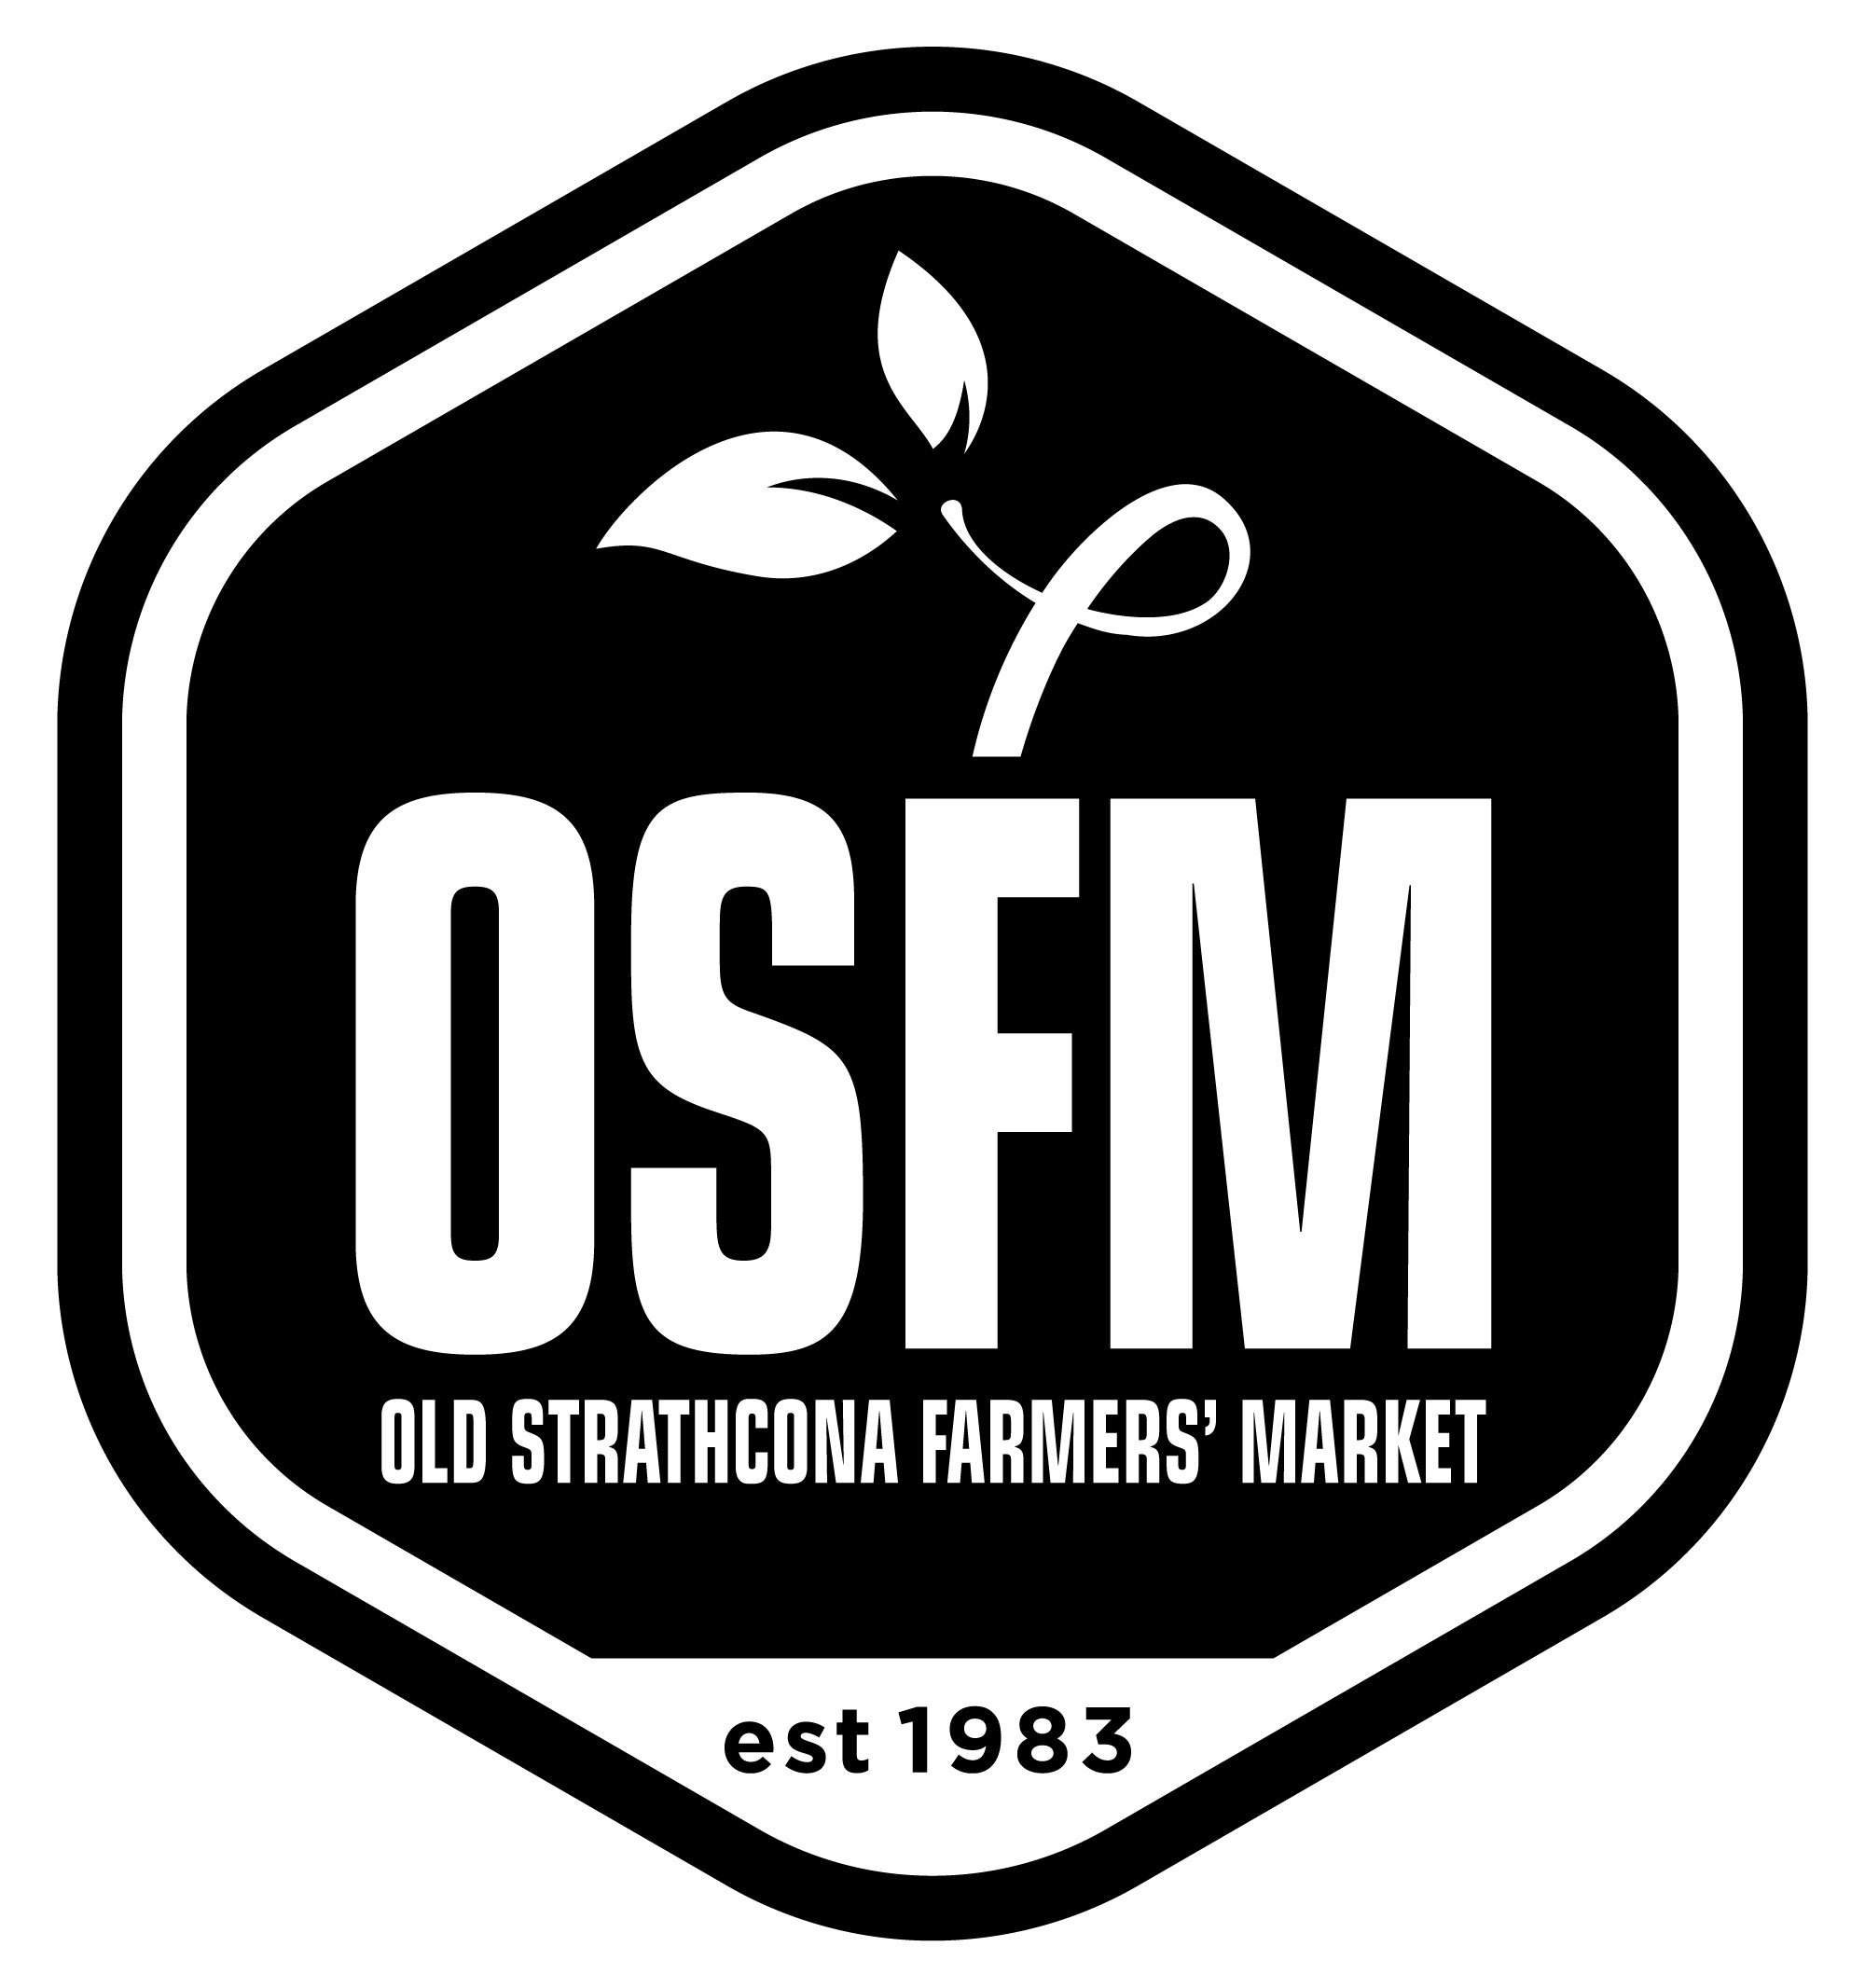 Old Strathcona Farmers' Market